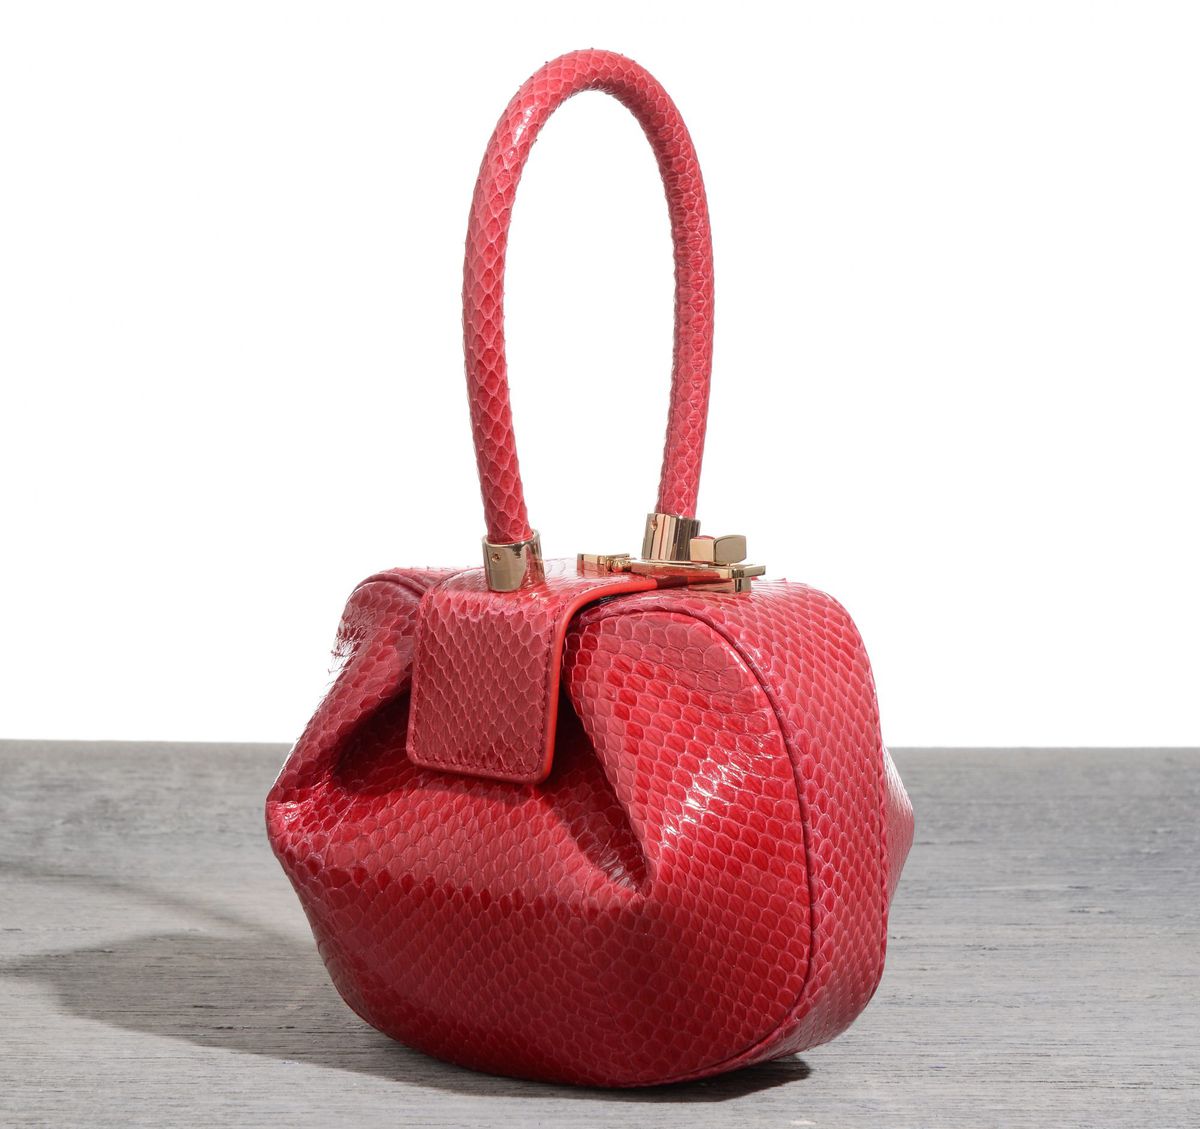 Demi bag in red snake, $2,495; at Net-a-porter.com.